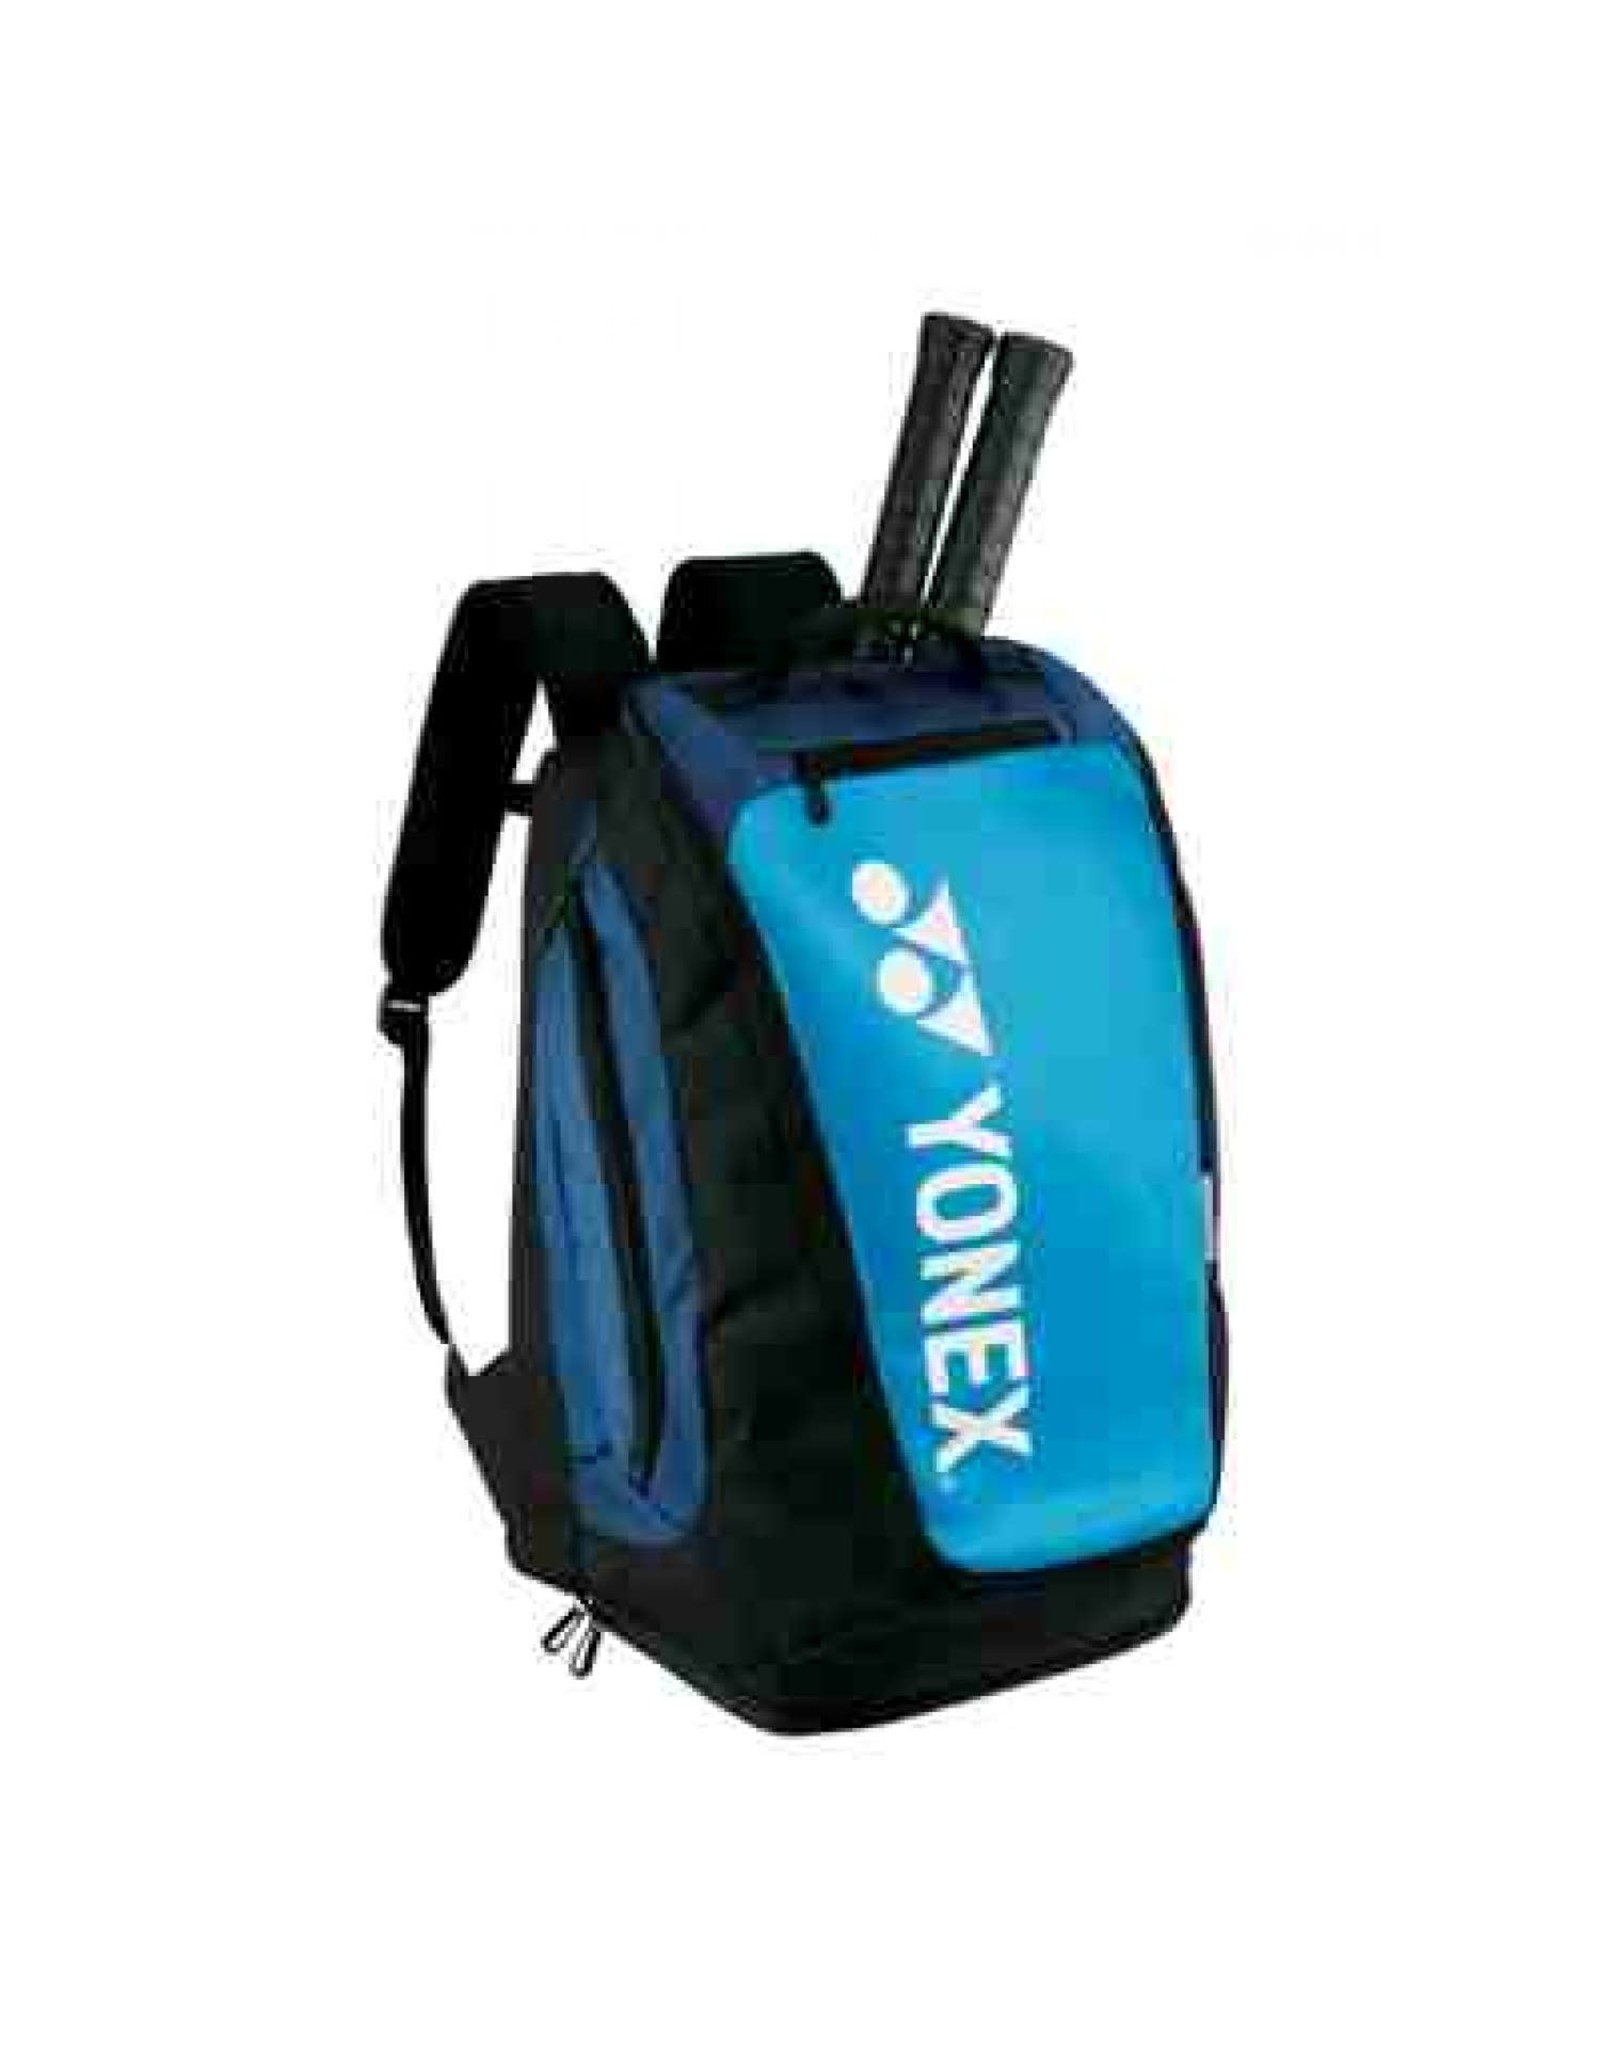 Yonex Pro Backpack